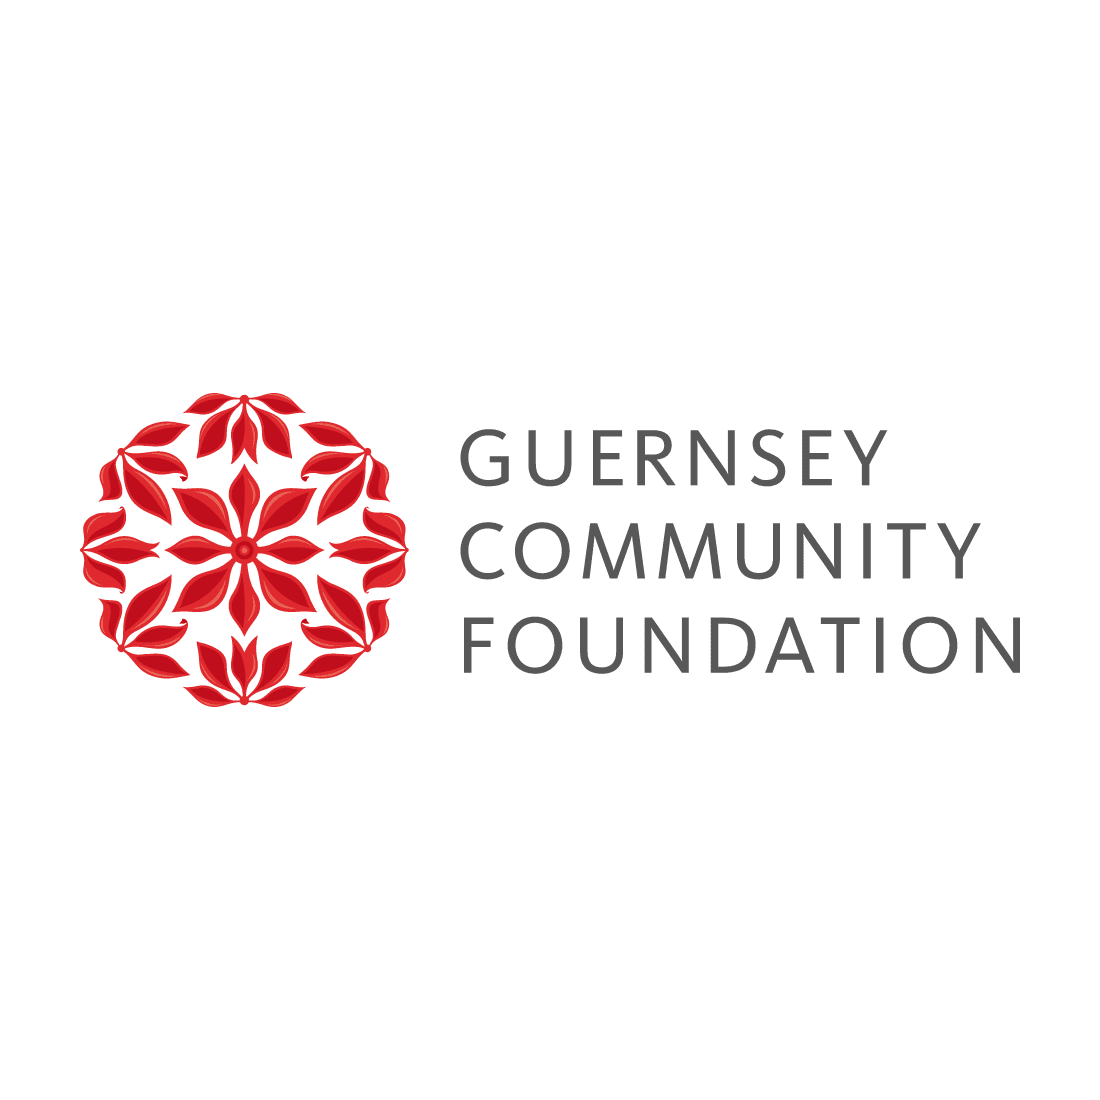 The Guernsey Community Foundation